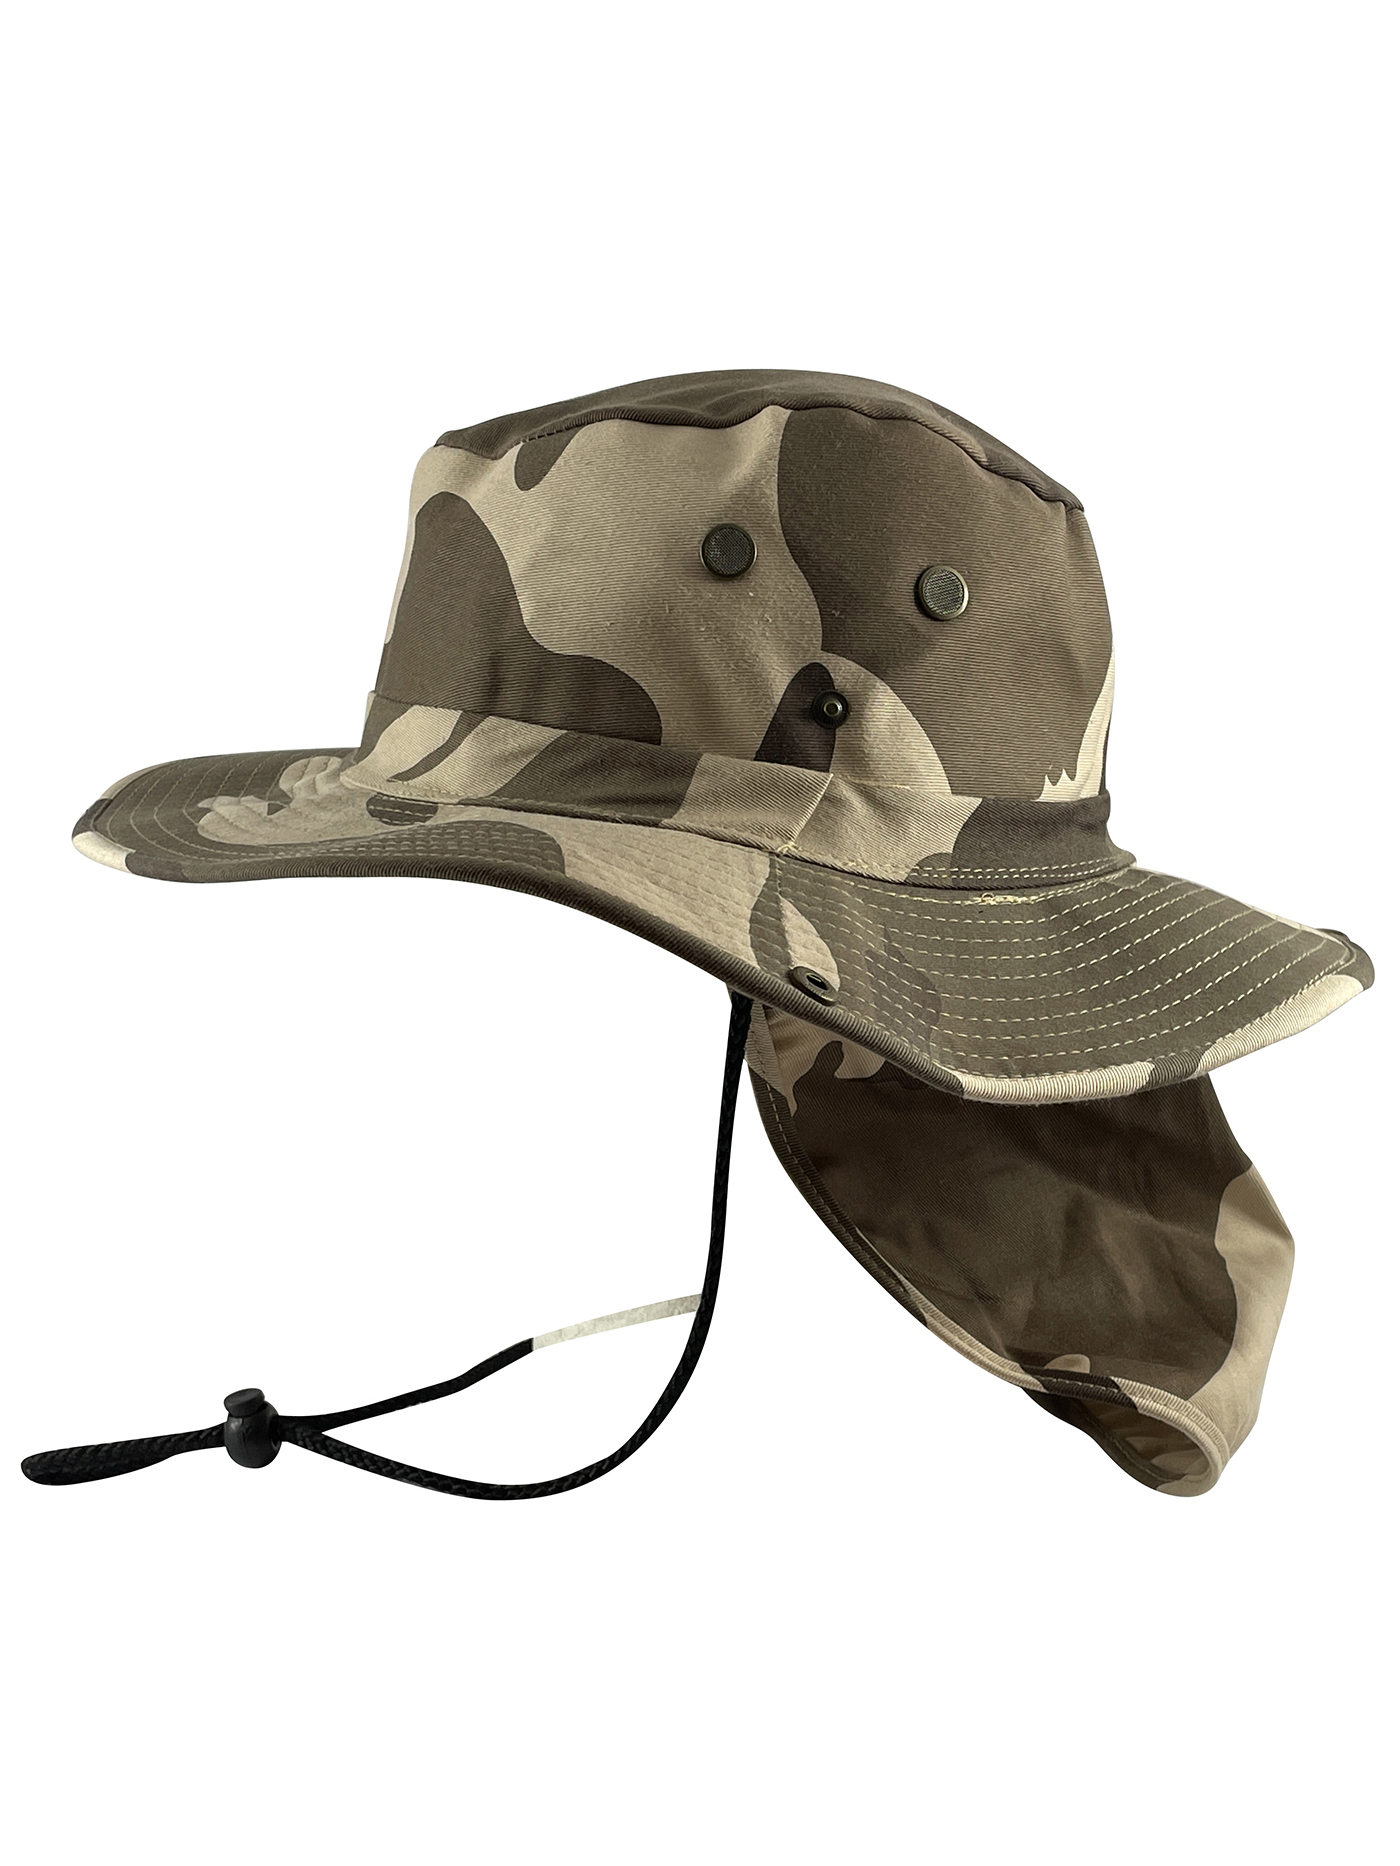 Top Headwear Safari Explorer Bucket Hat Flap Neck Cover - Desert Camo - S - image 2 of 3